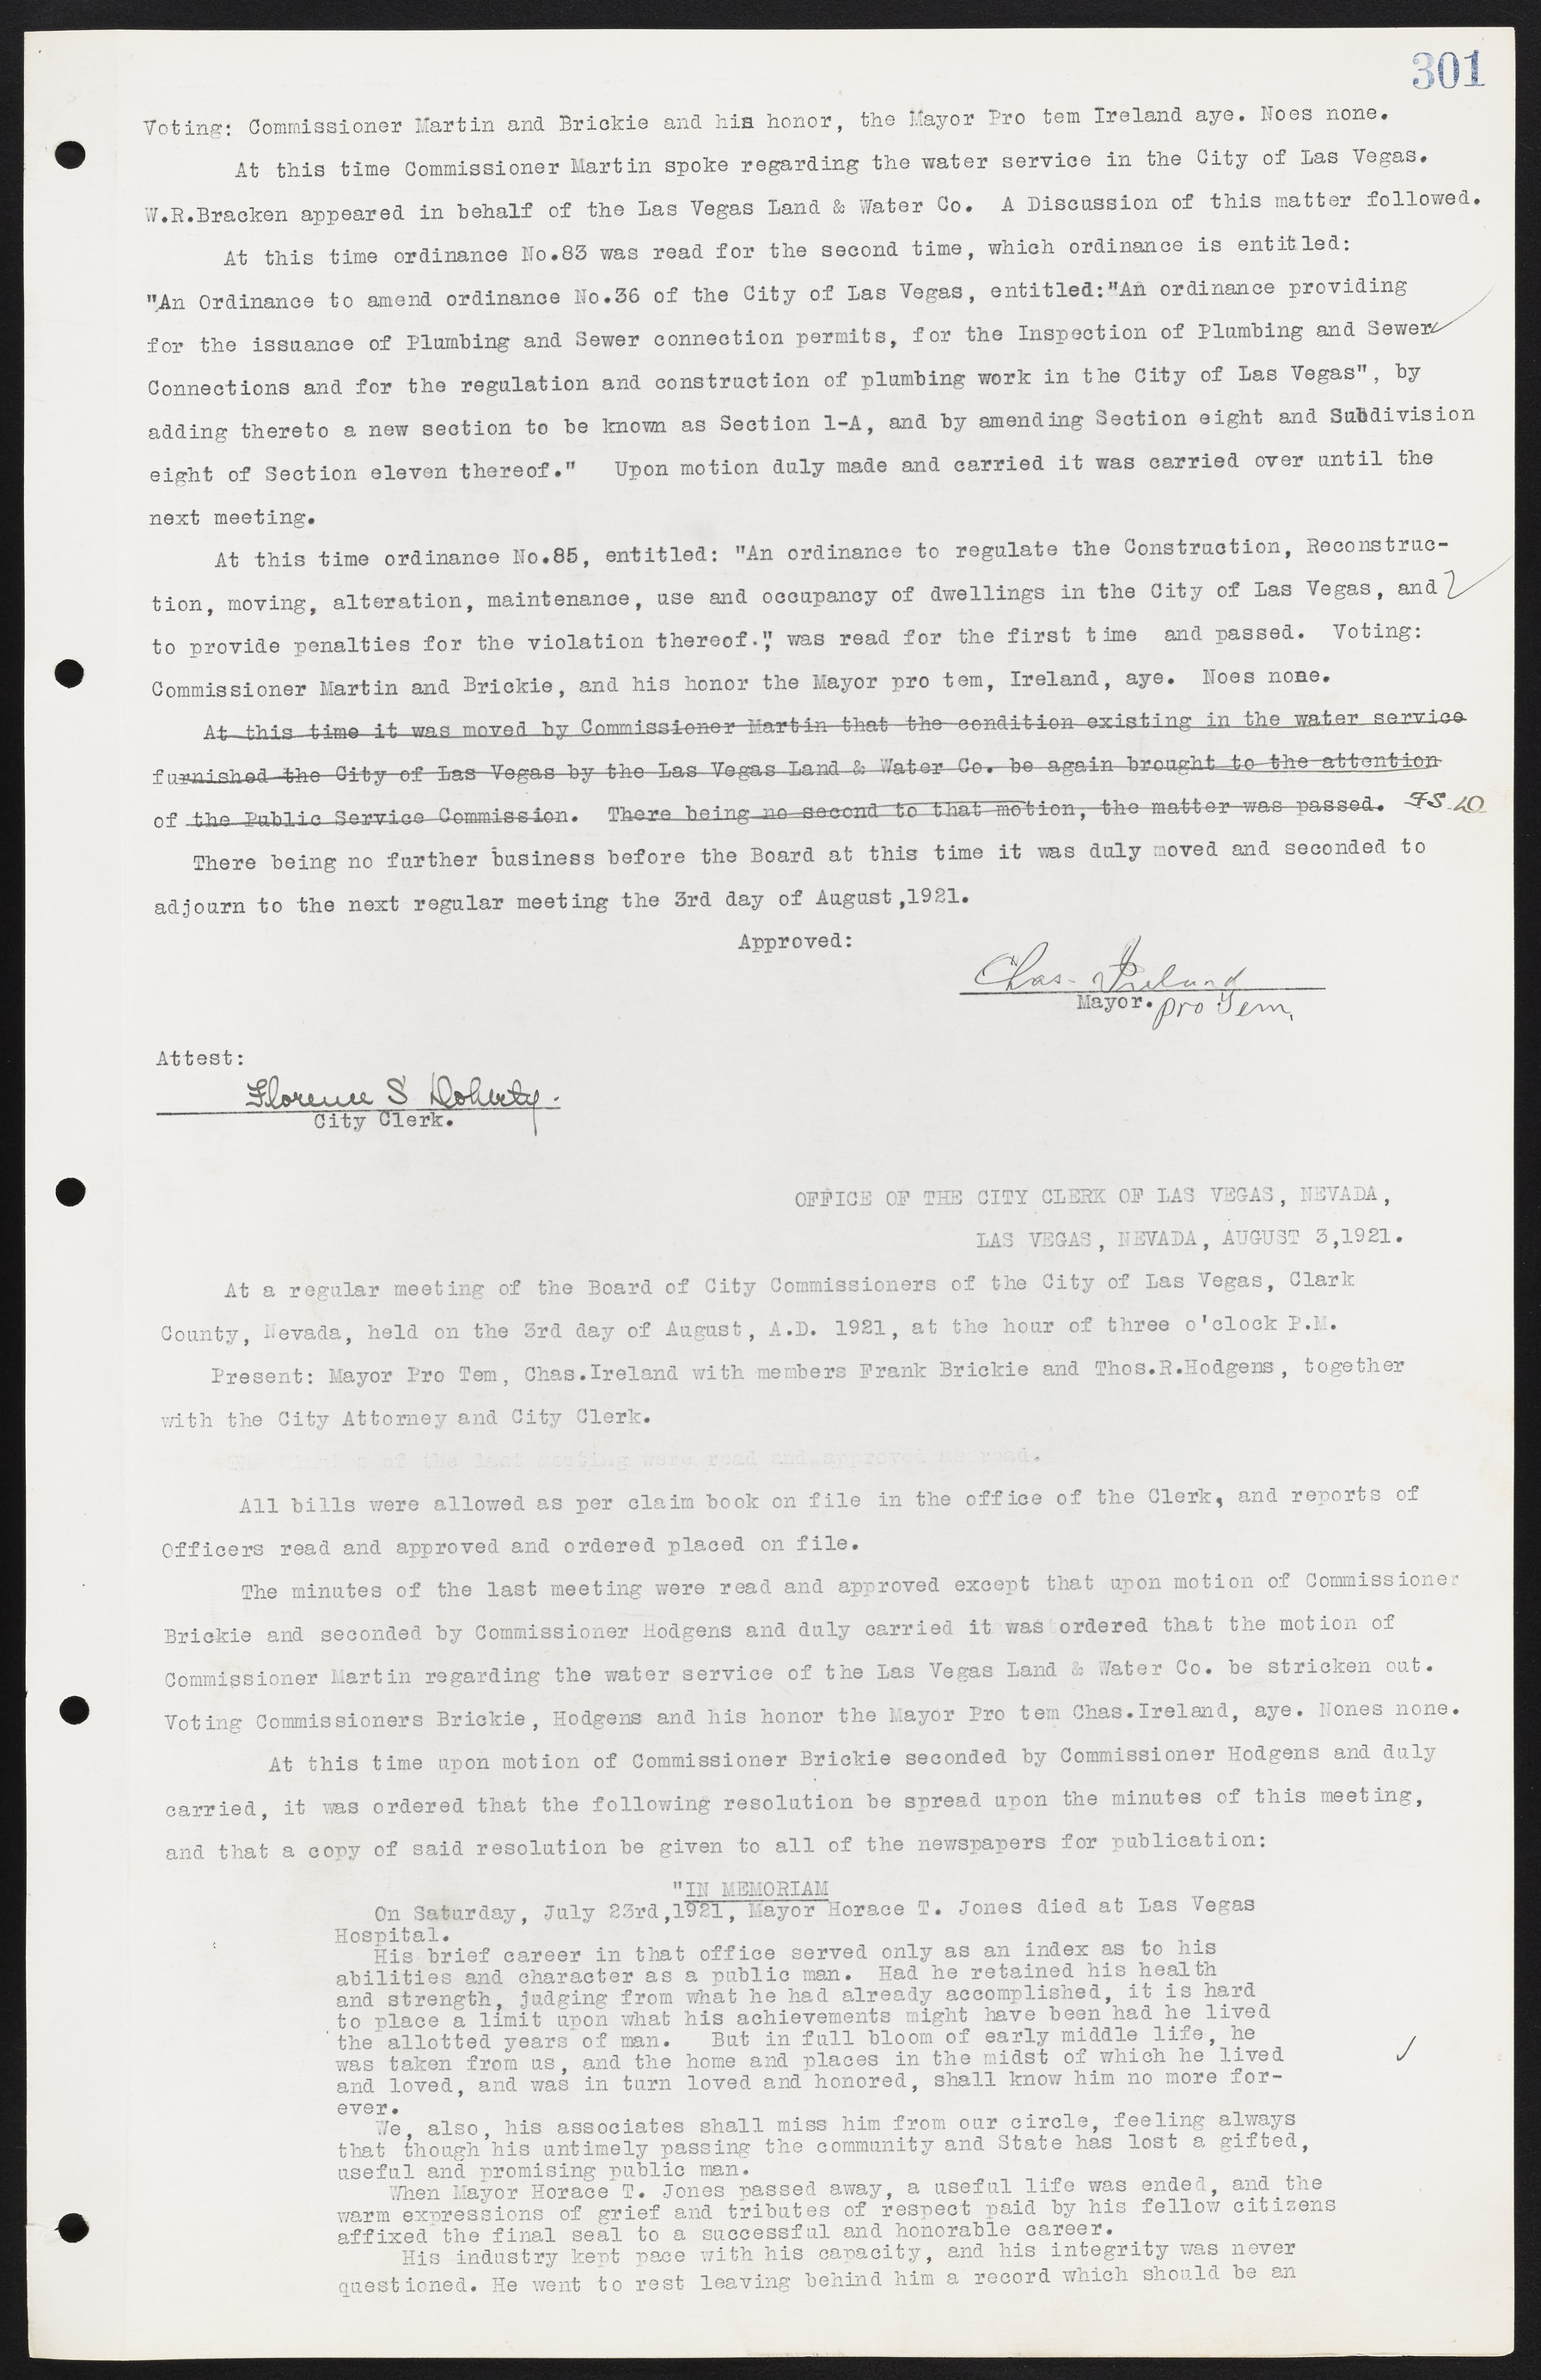 Las Vegas City Commission Minutes, June 22, 1911 to February 7, 1922, lvc000001-317